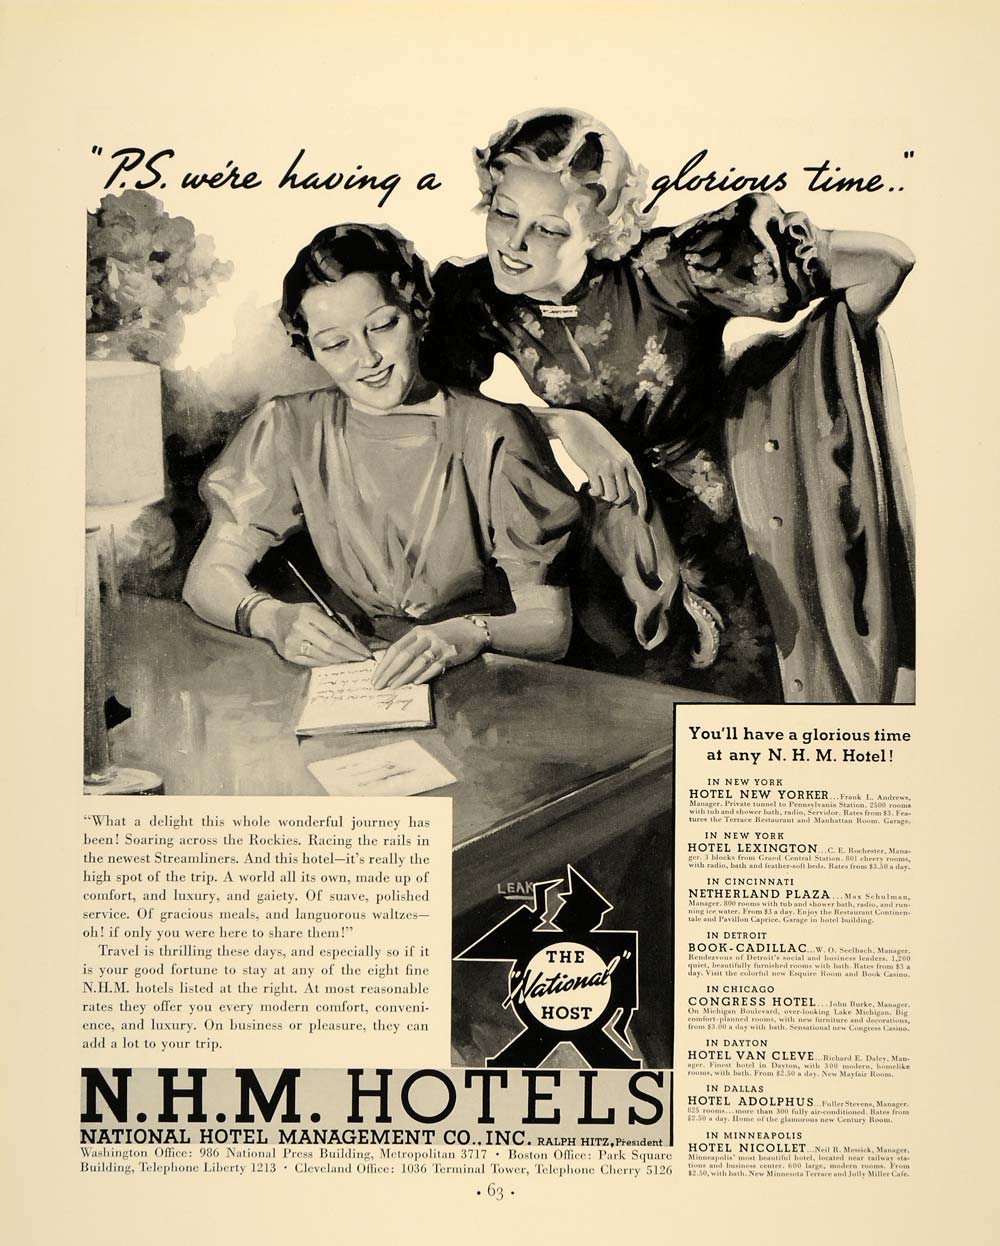 1937 Ad NHM Hotels Nicollet Congress Cleve New Yorker - ORIGINAL FTT9